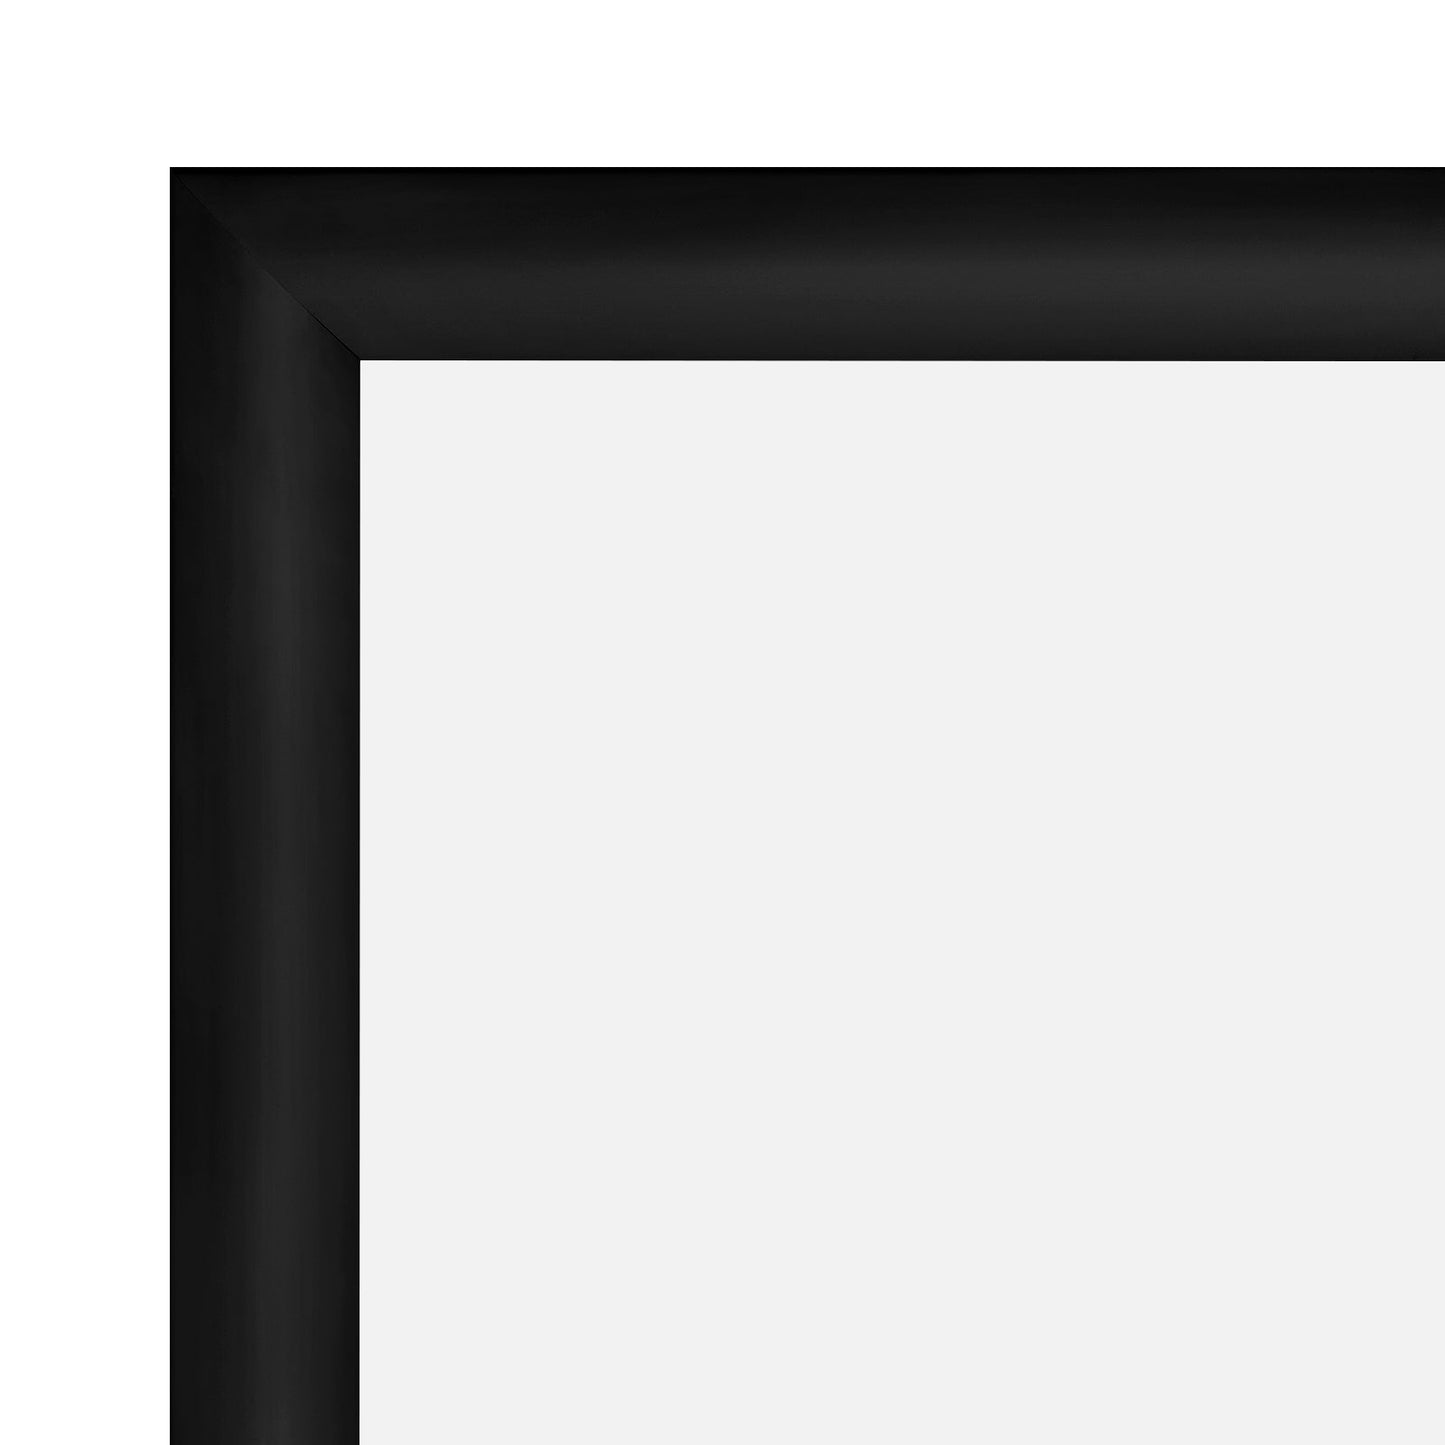 19x26 Black SnapeZo® Snap Frame - 1.2" Profile